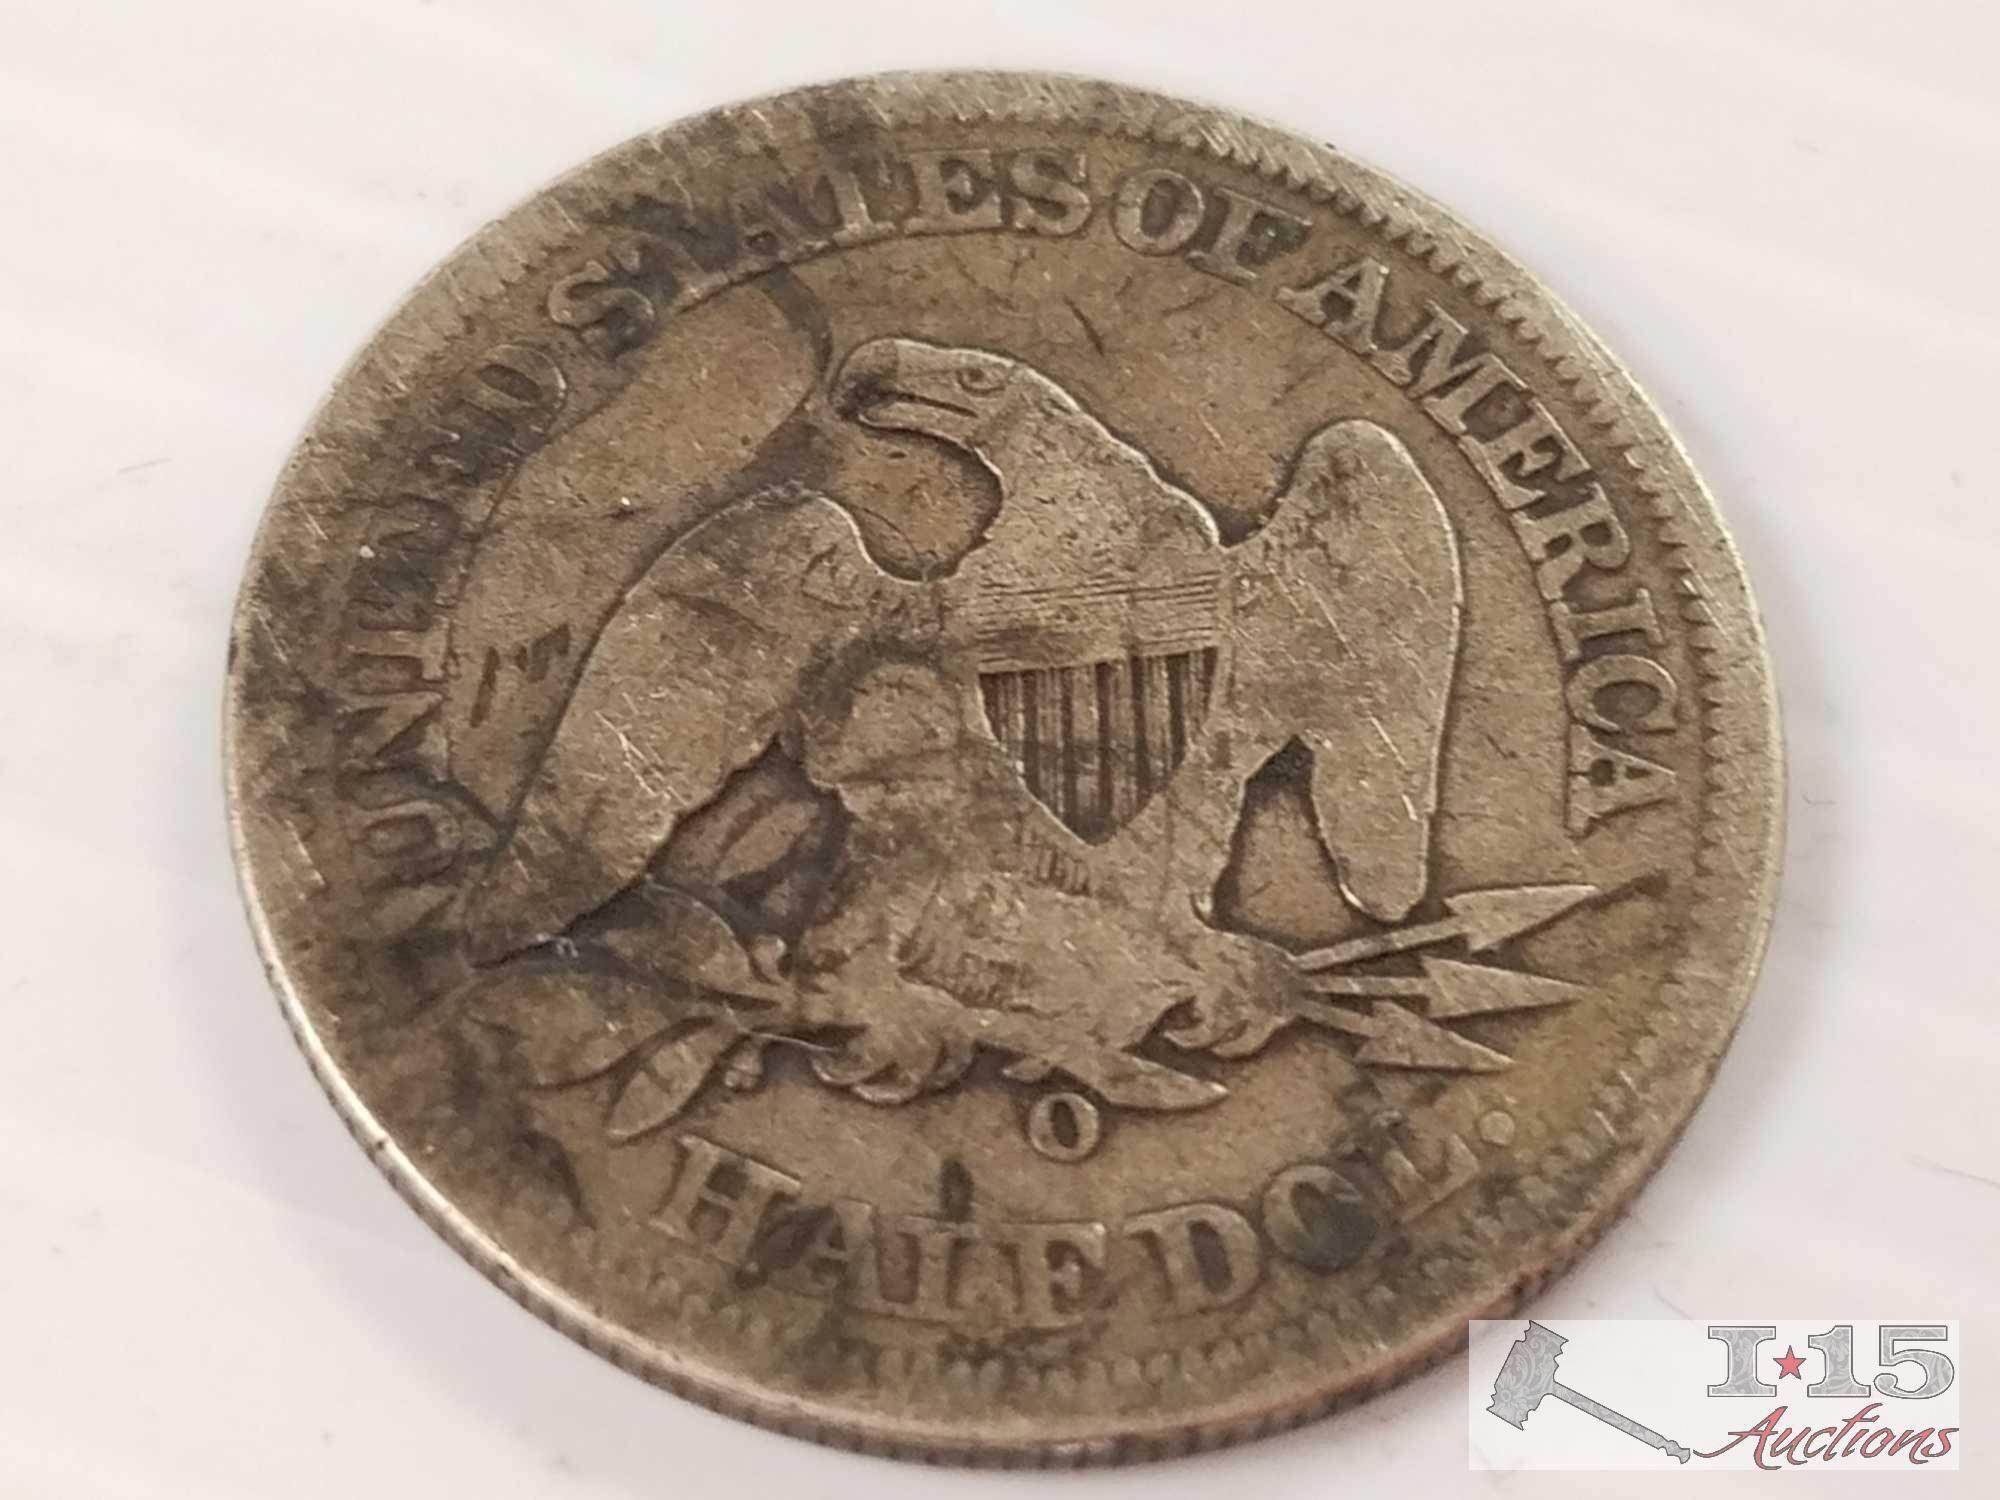 3 liberty silver half dollars 1853, 1854, 1863